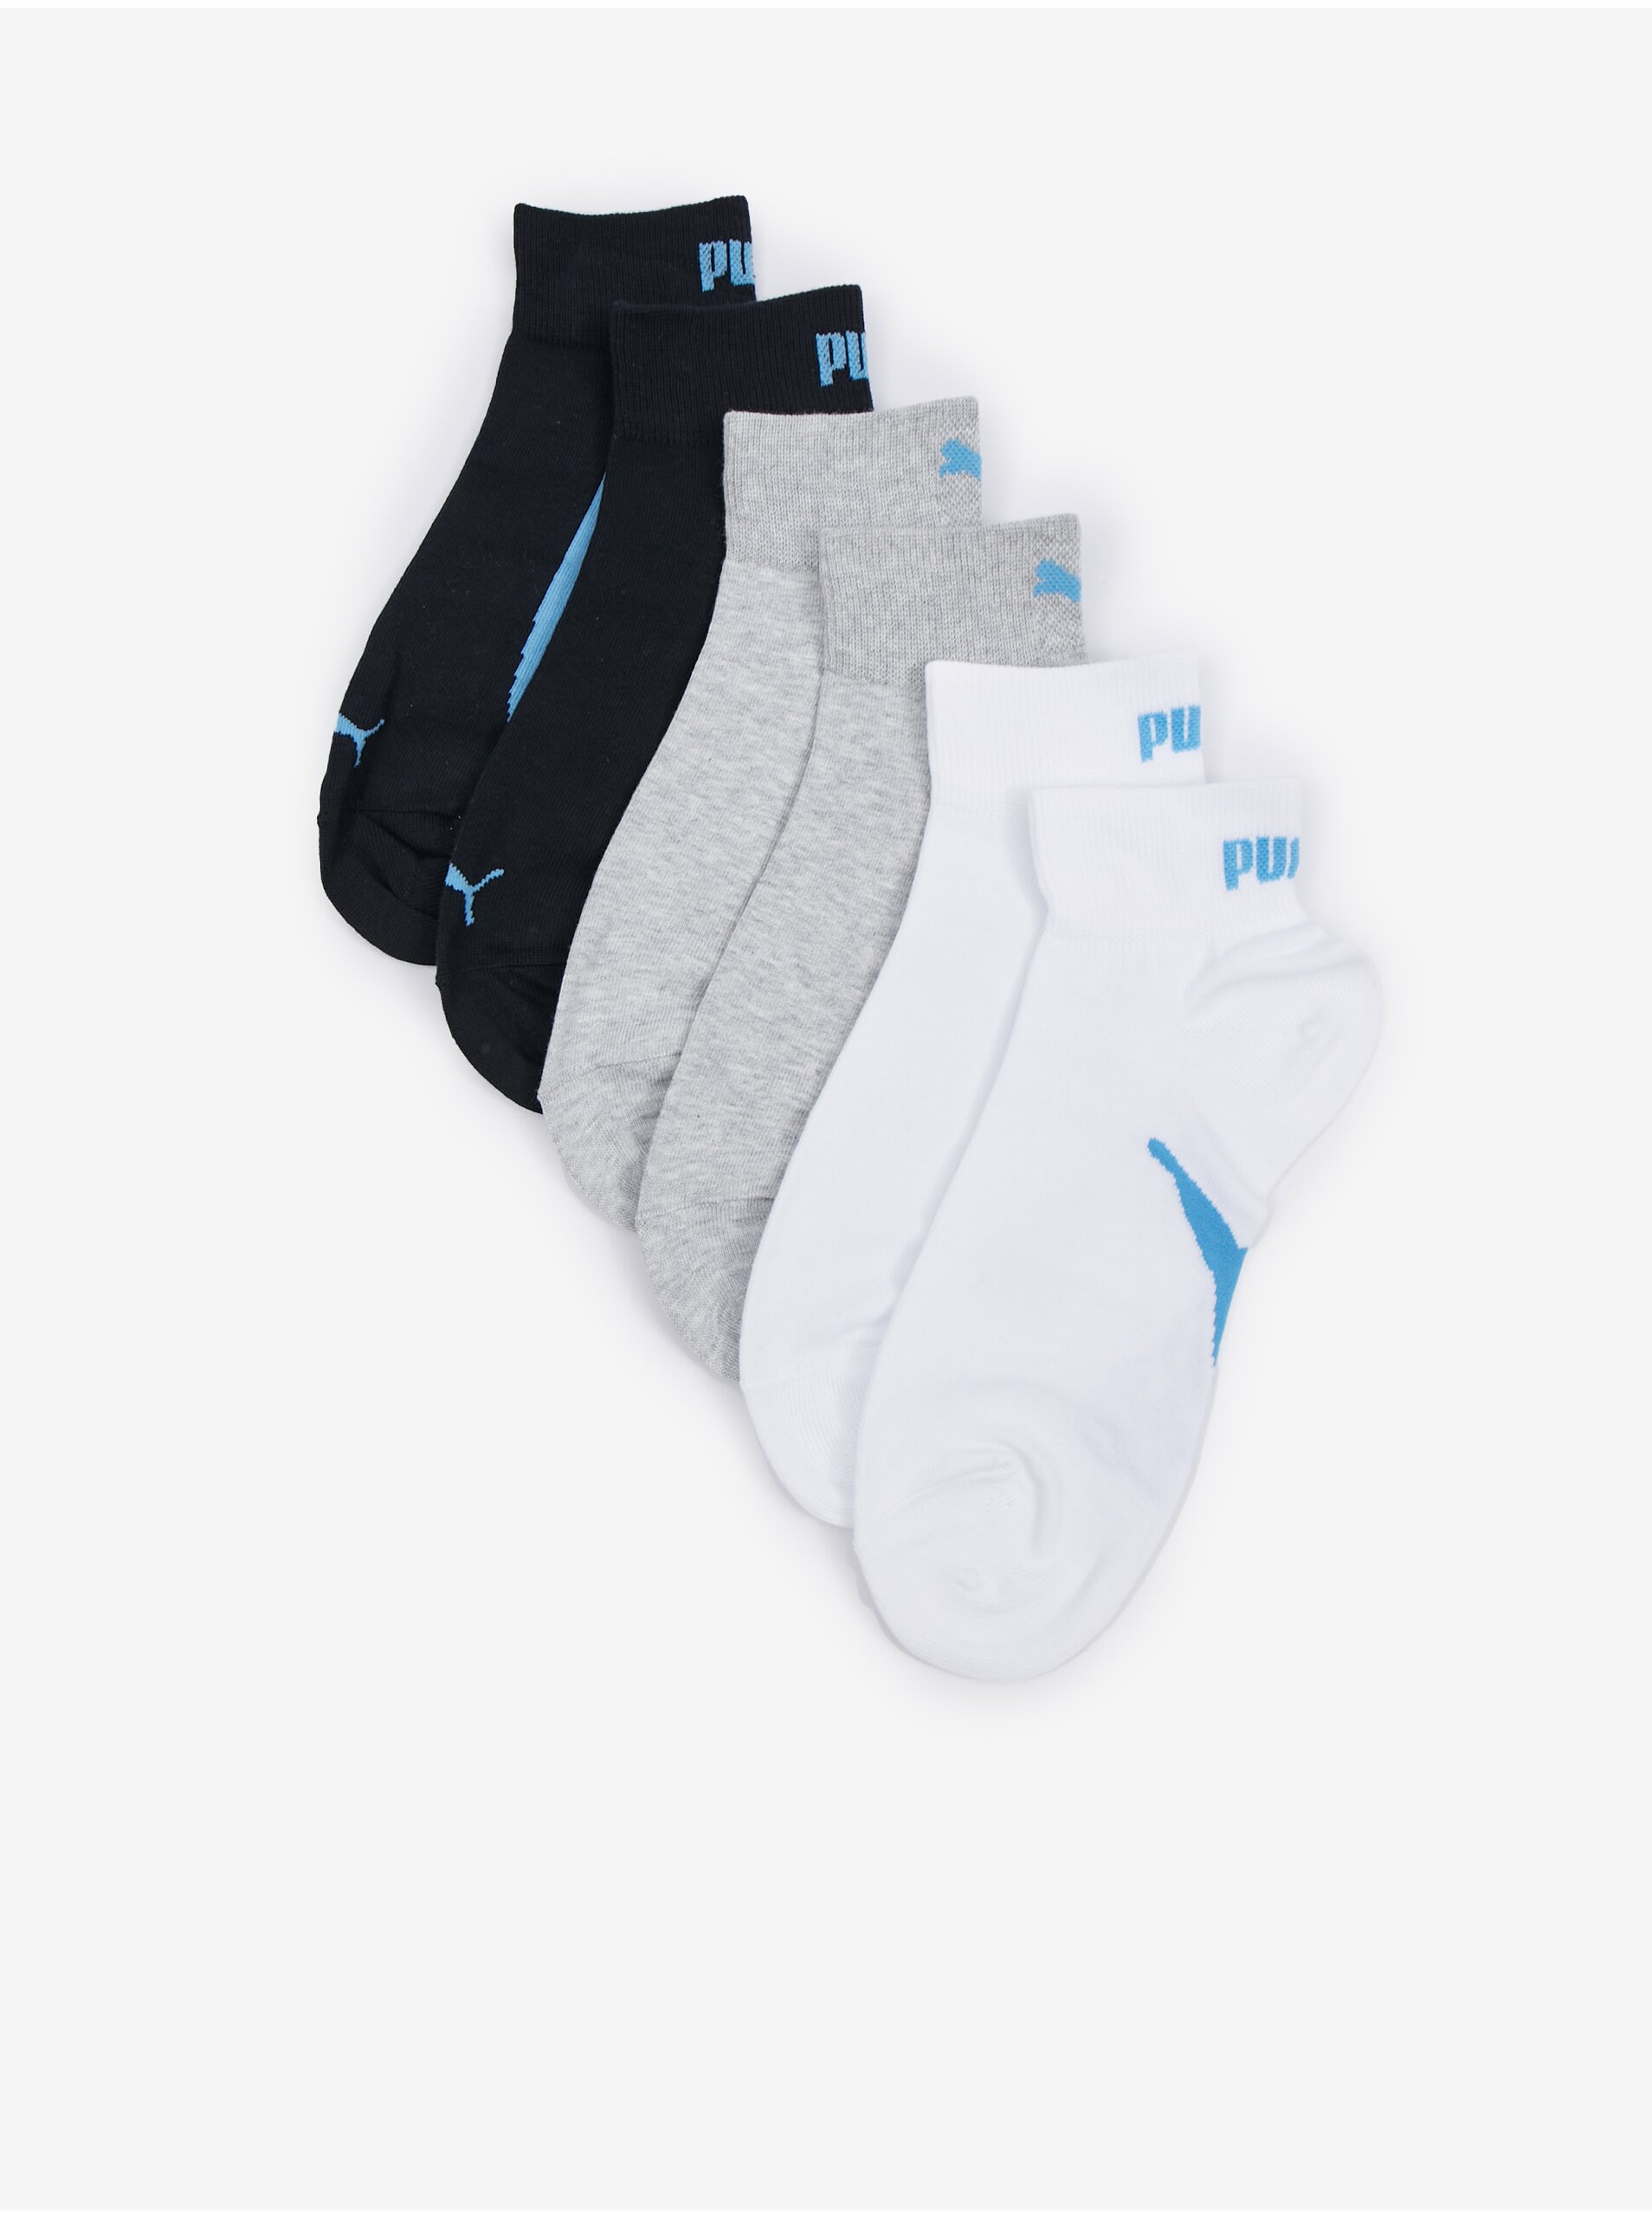 Puma Set of three pairs of men's socks in black, light gray and white - Men